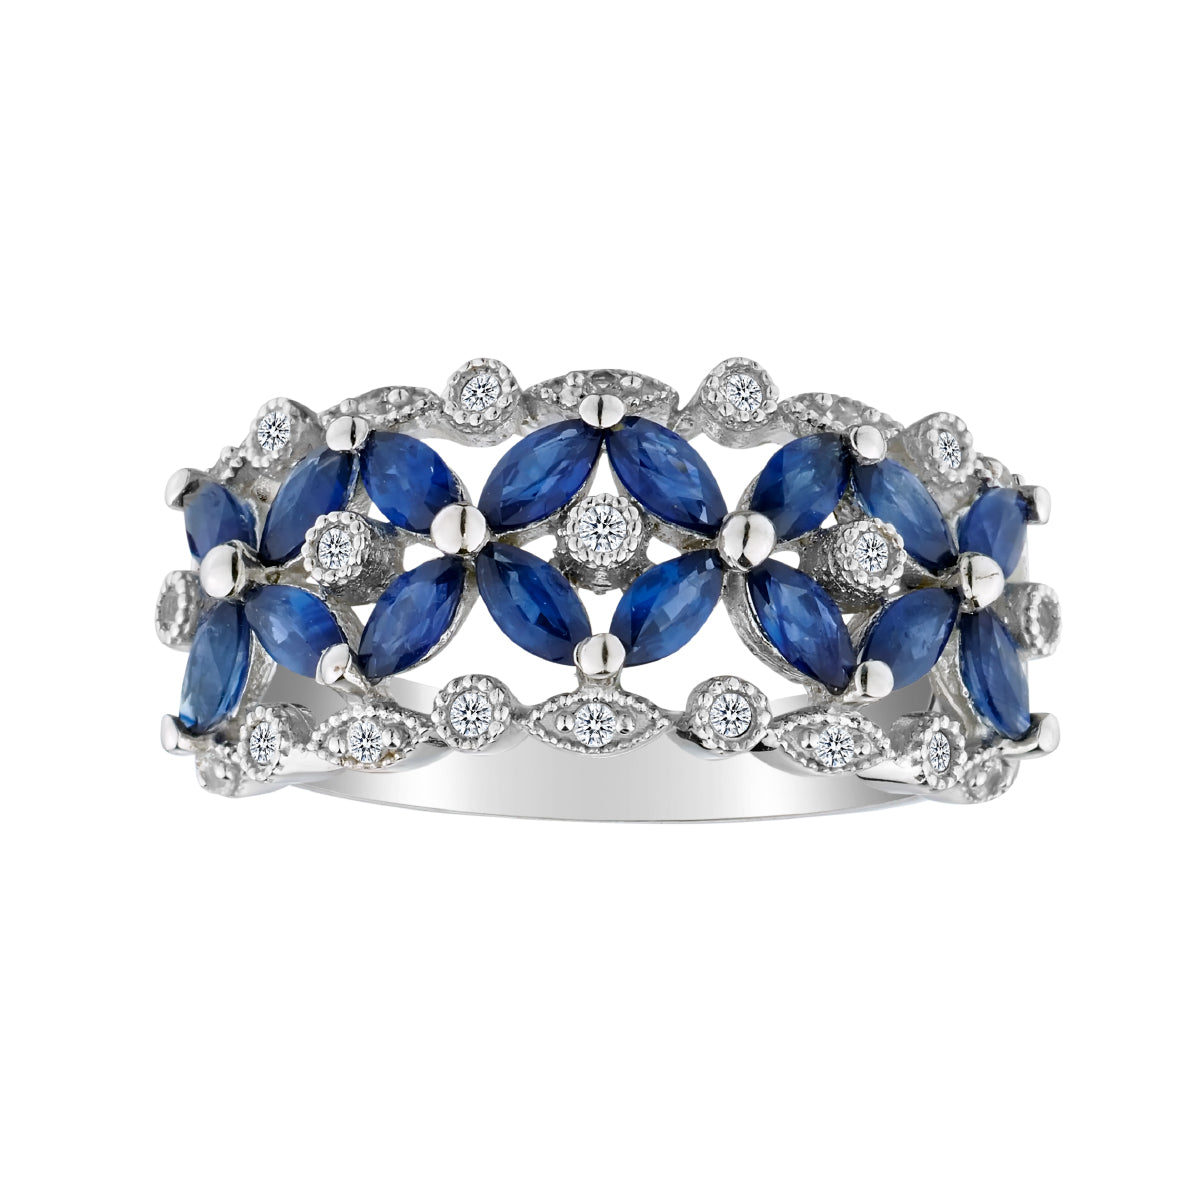 1.60 Carat Genuine Blue Sapphire & .18 Carat White Topaz Ring, Silver.....................NOW